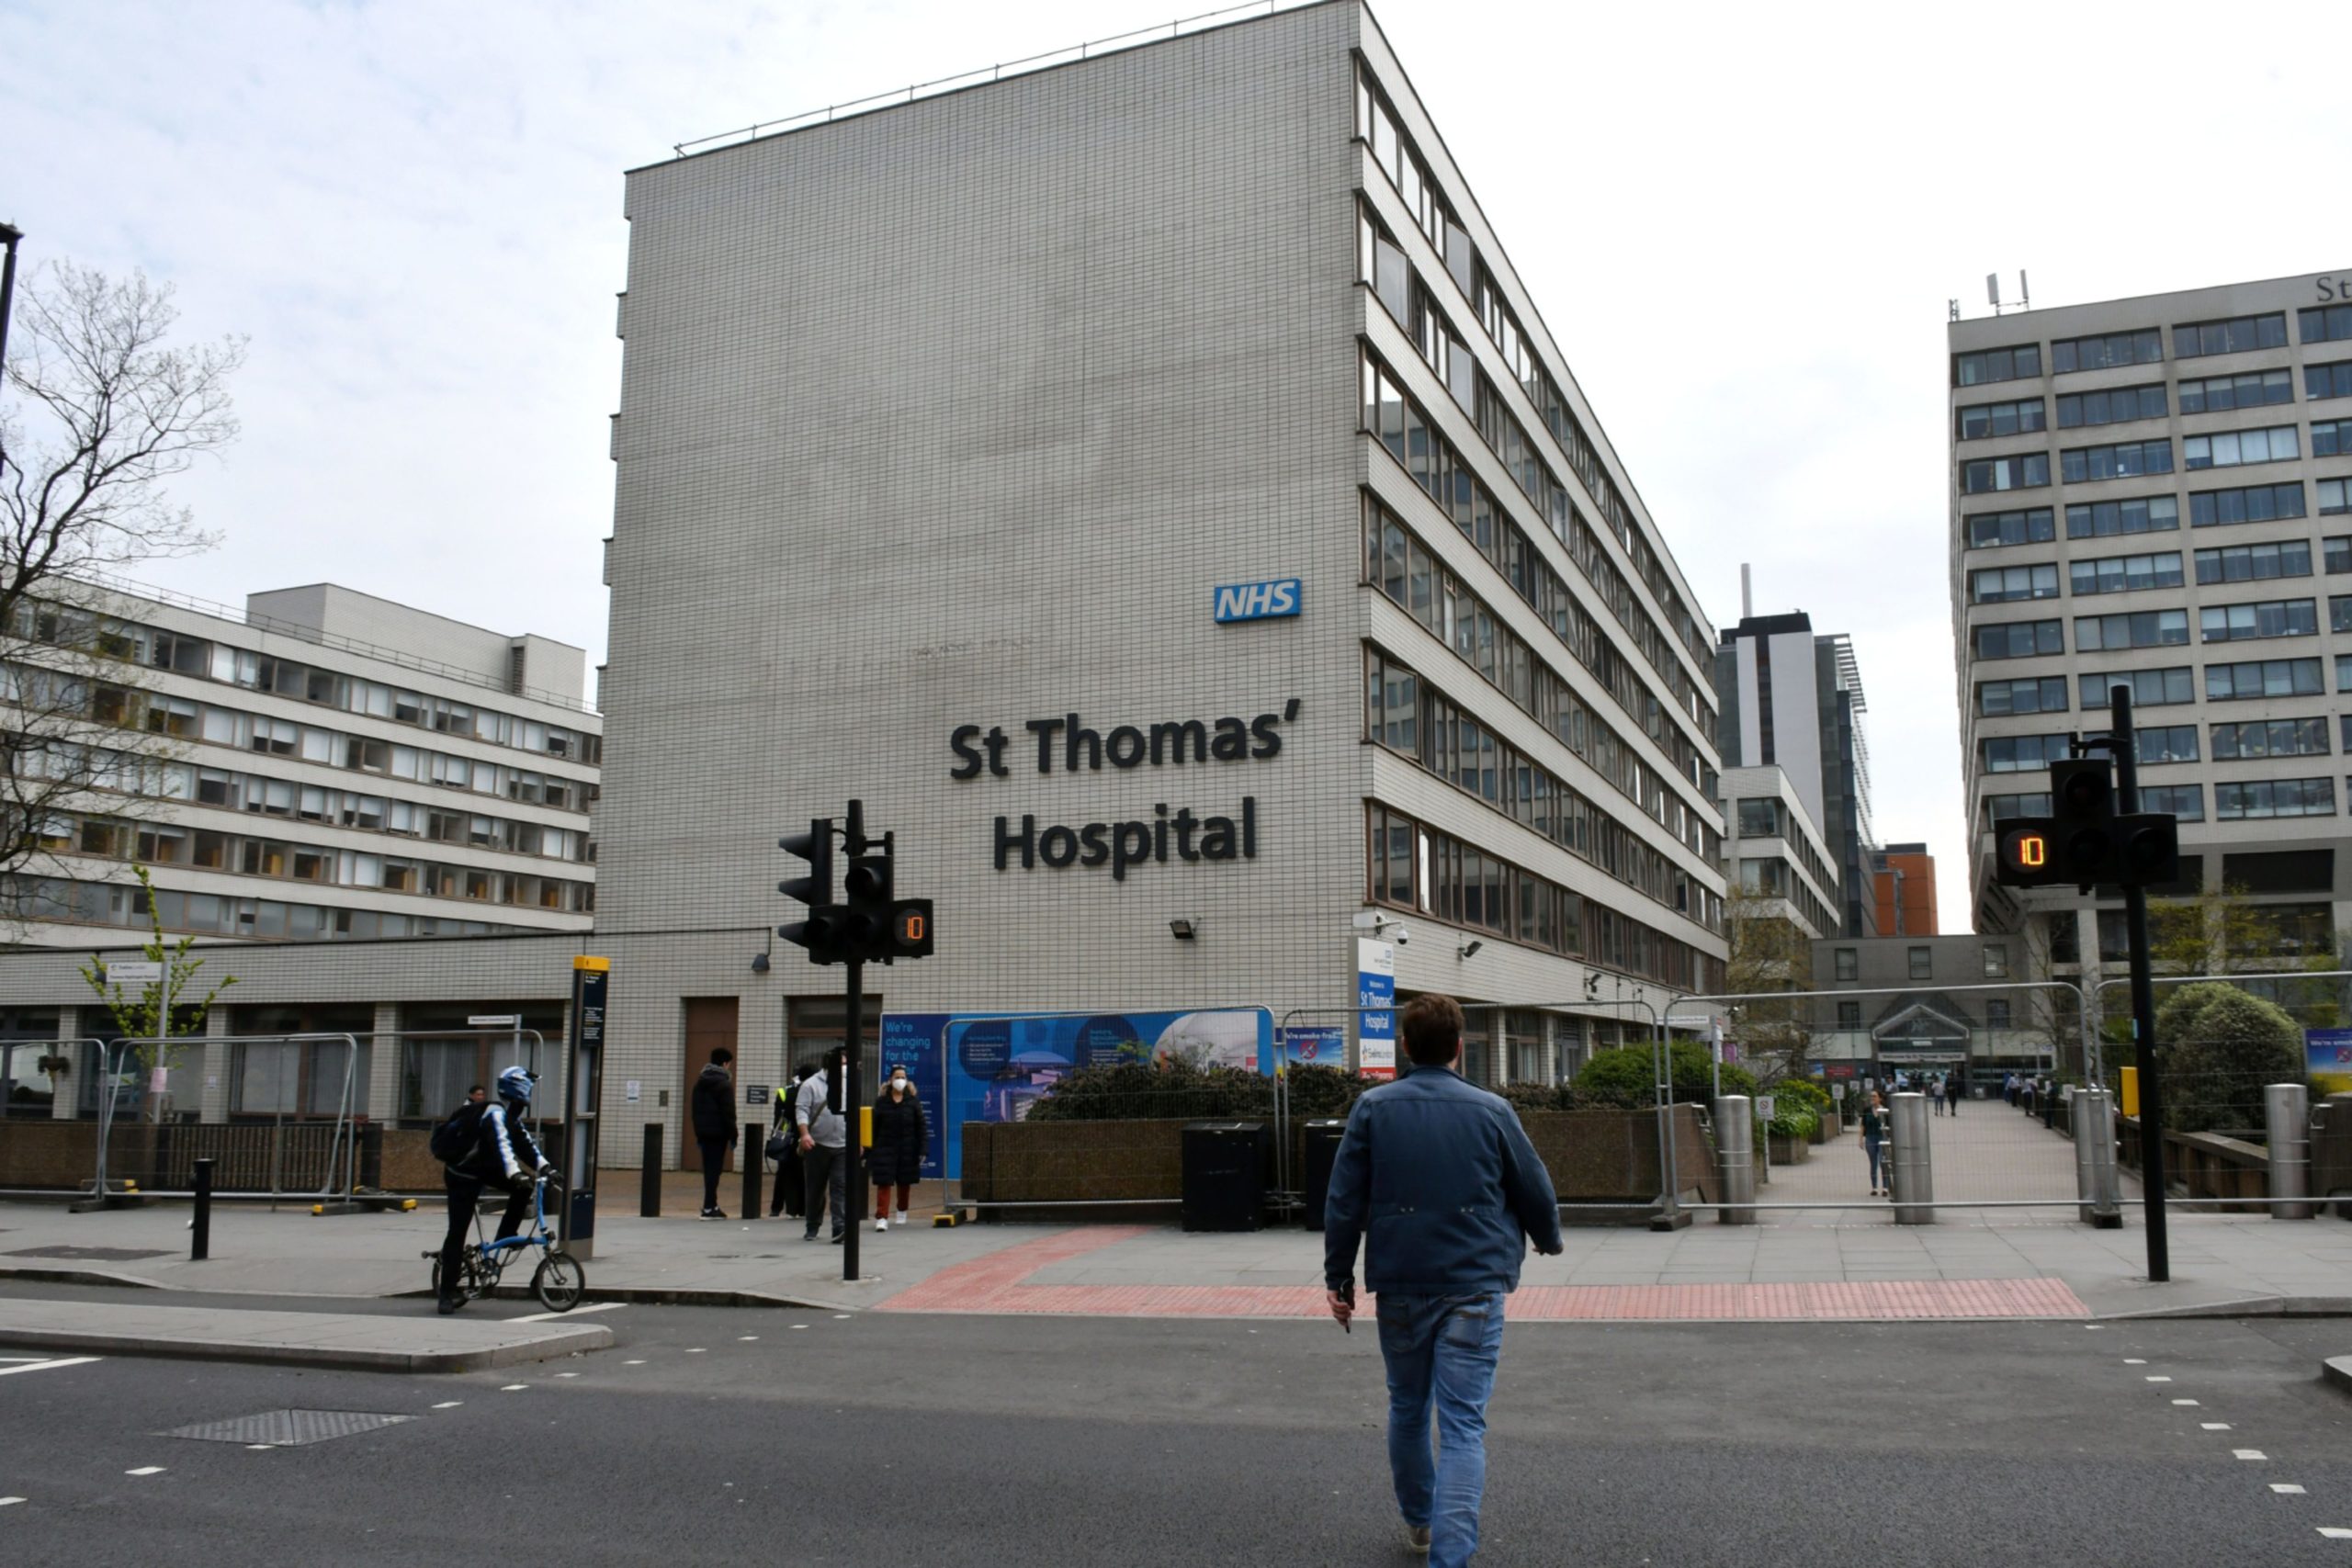 St Thomas' Hospital, London. Photo by Nils Jorgensen/Shutterstock